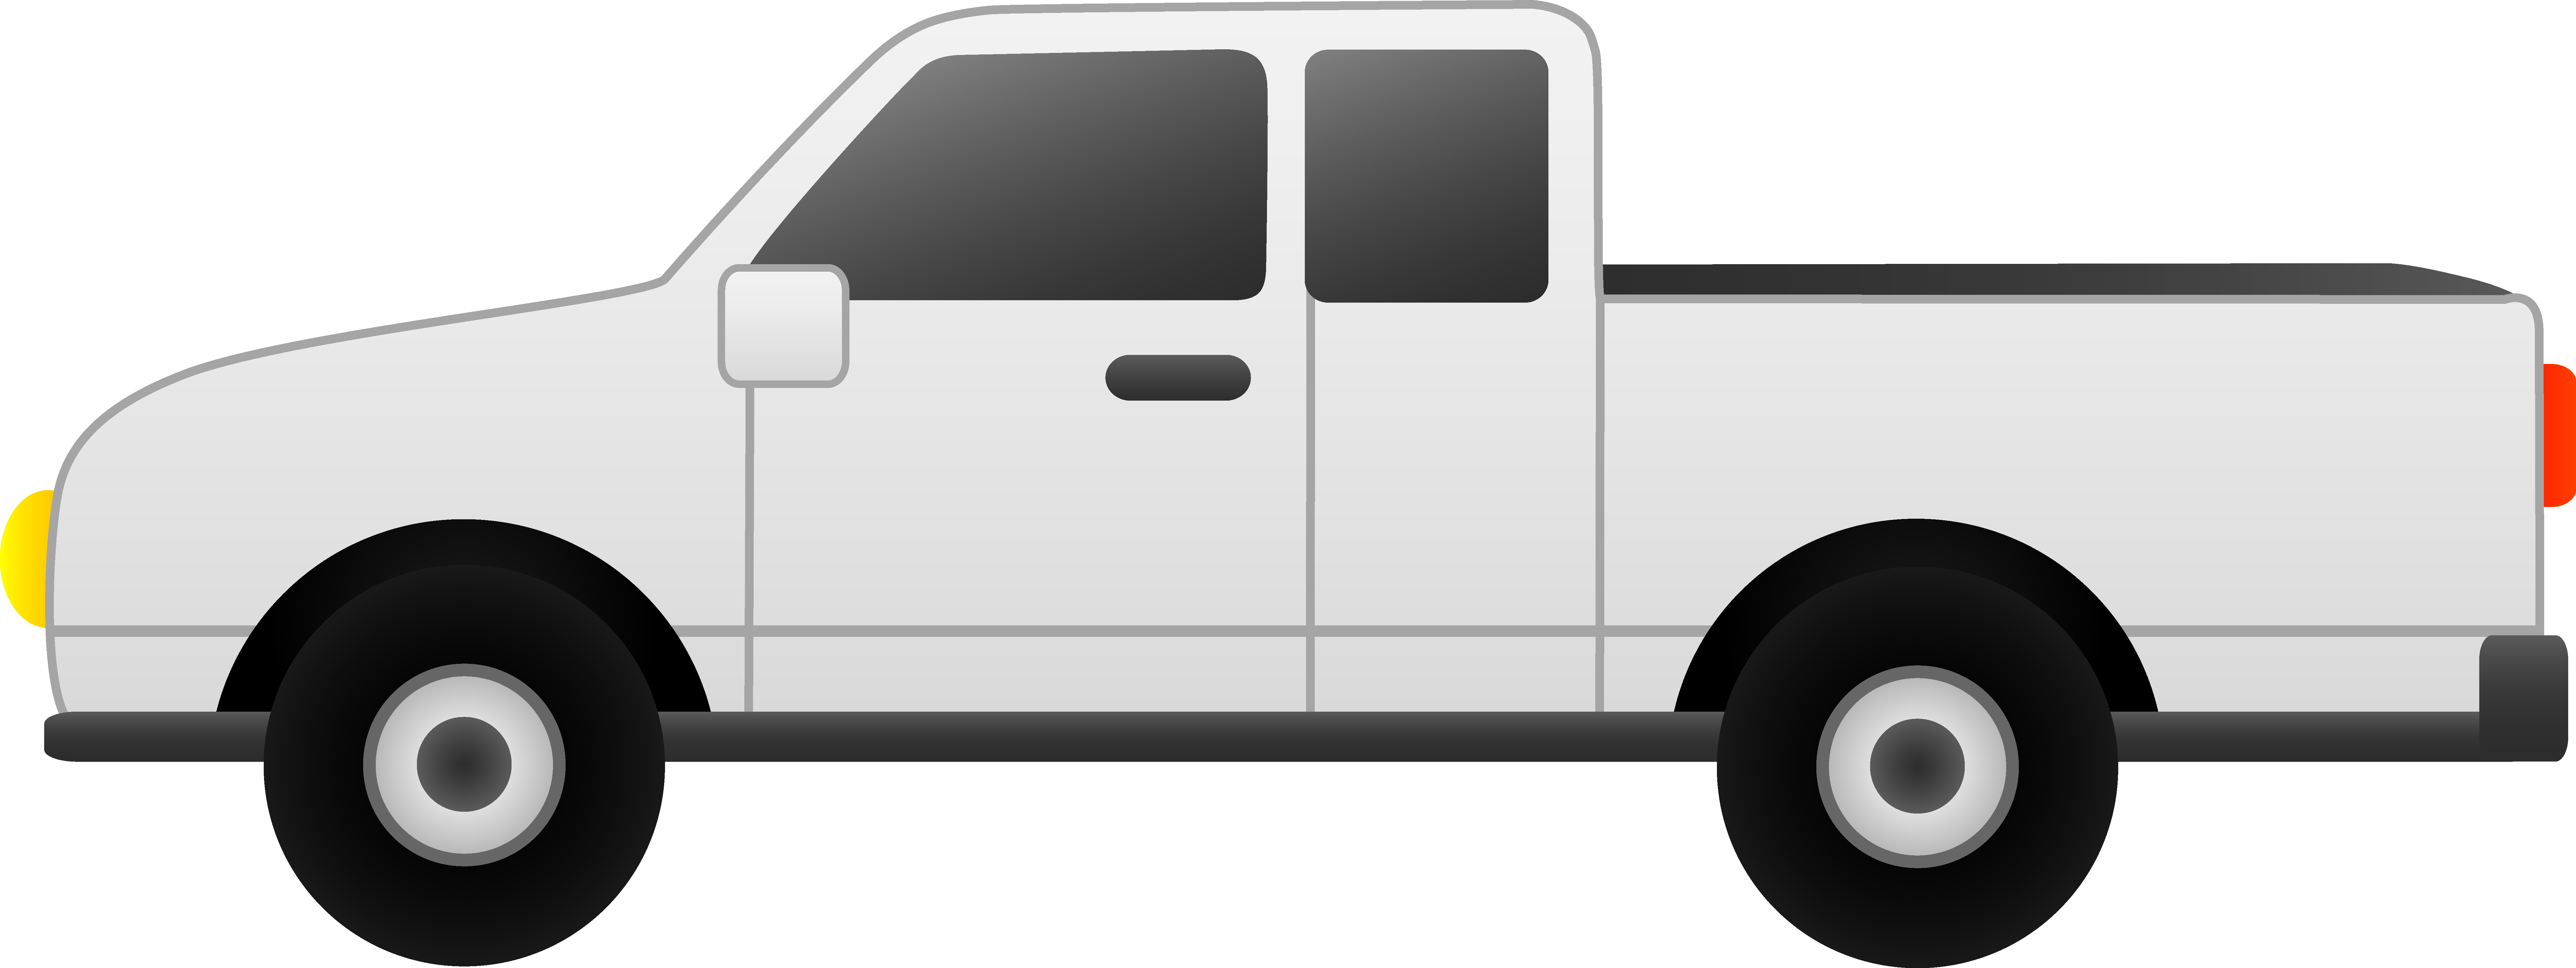 Dodge pickup truck clipart 